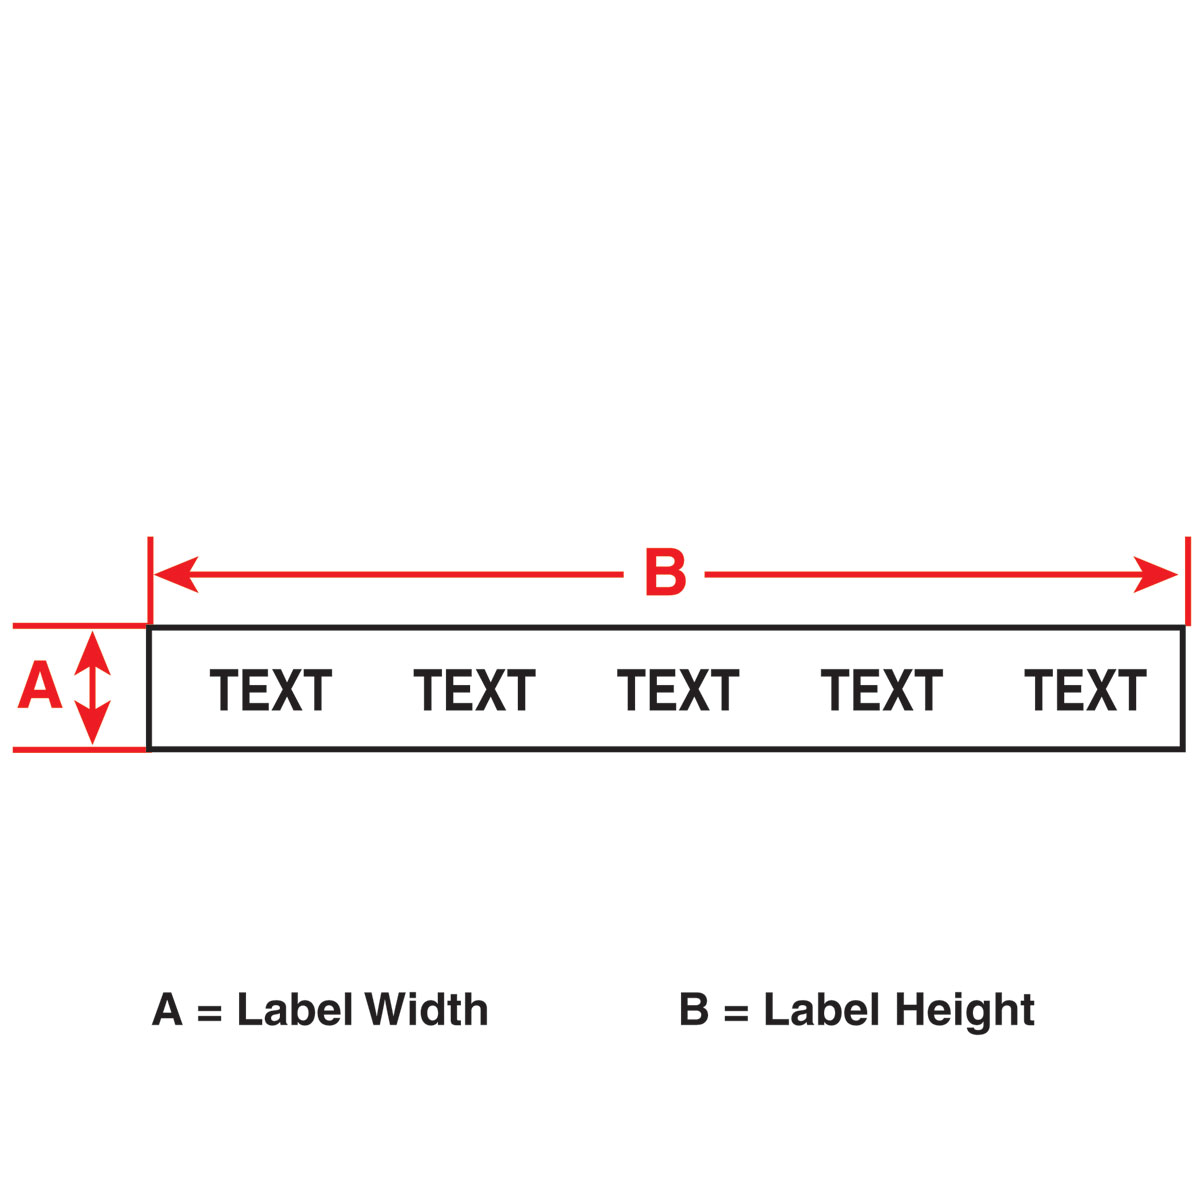 Label height. Патч панель бирка. Xsl-17-427 этикетка. Label b. ABNT маркировка.